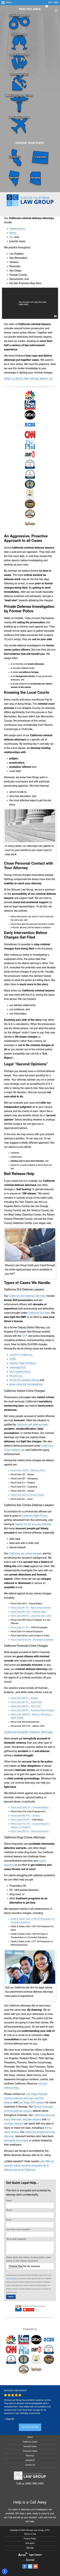 Shouse Law Group - Hemet CA Lawyers